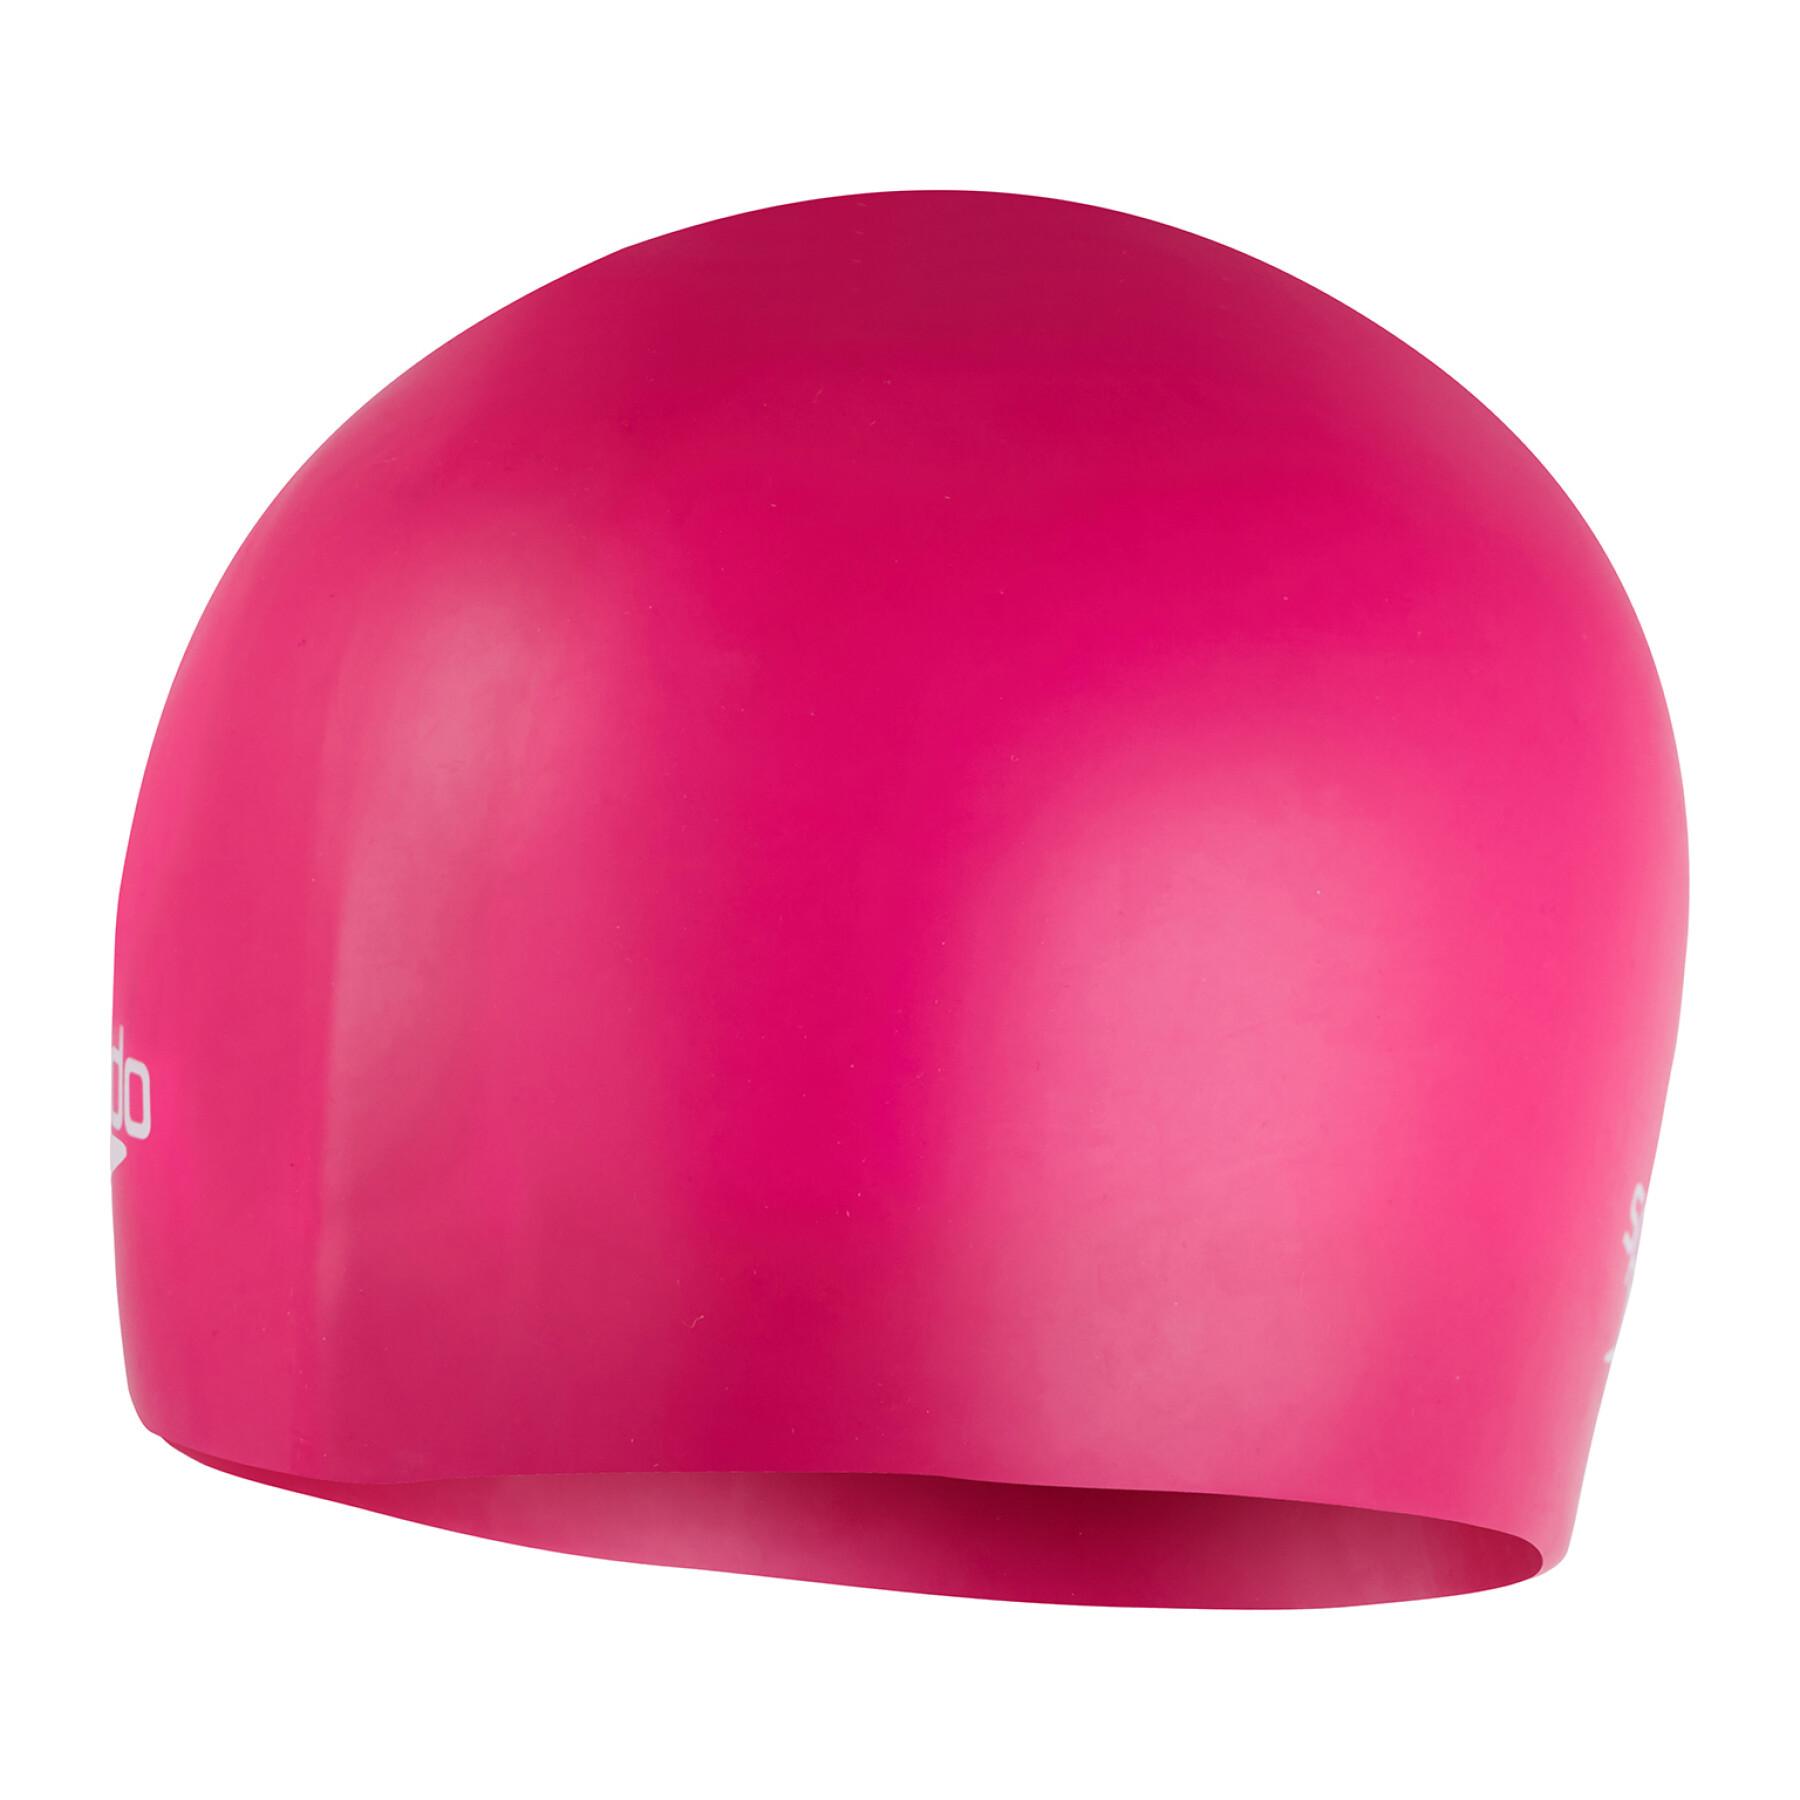 Silicone molded swim cap for women Speedo P12